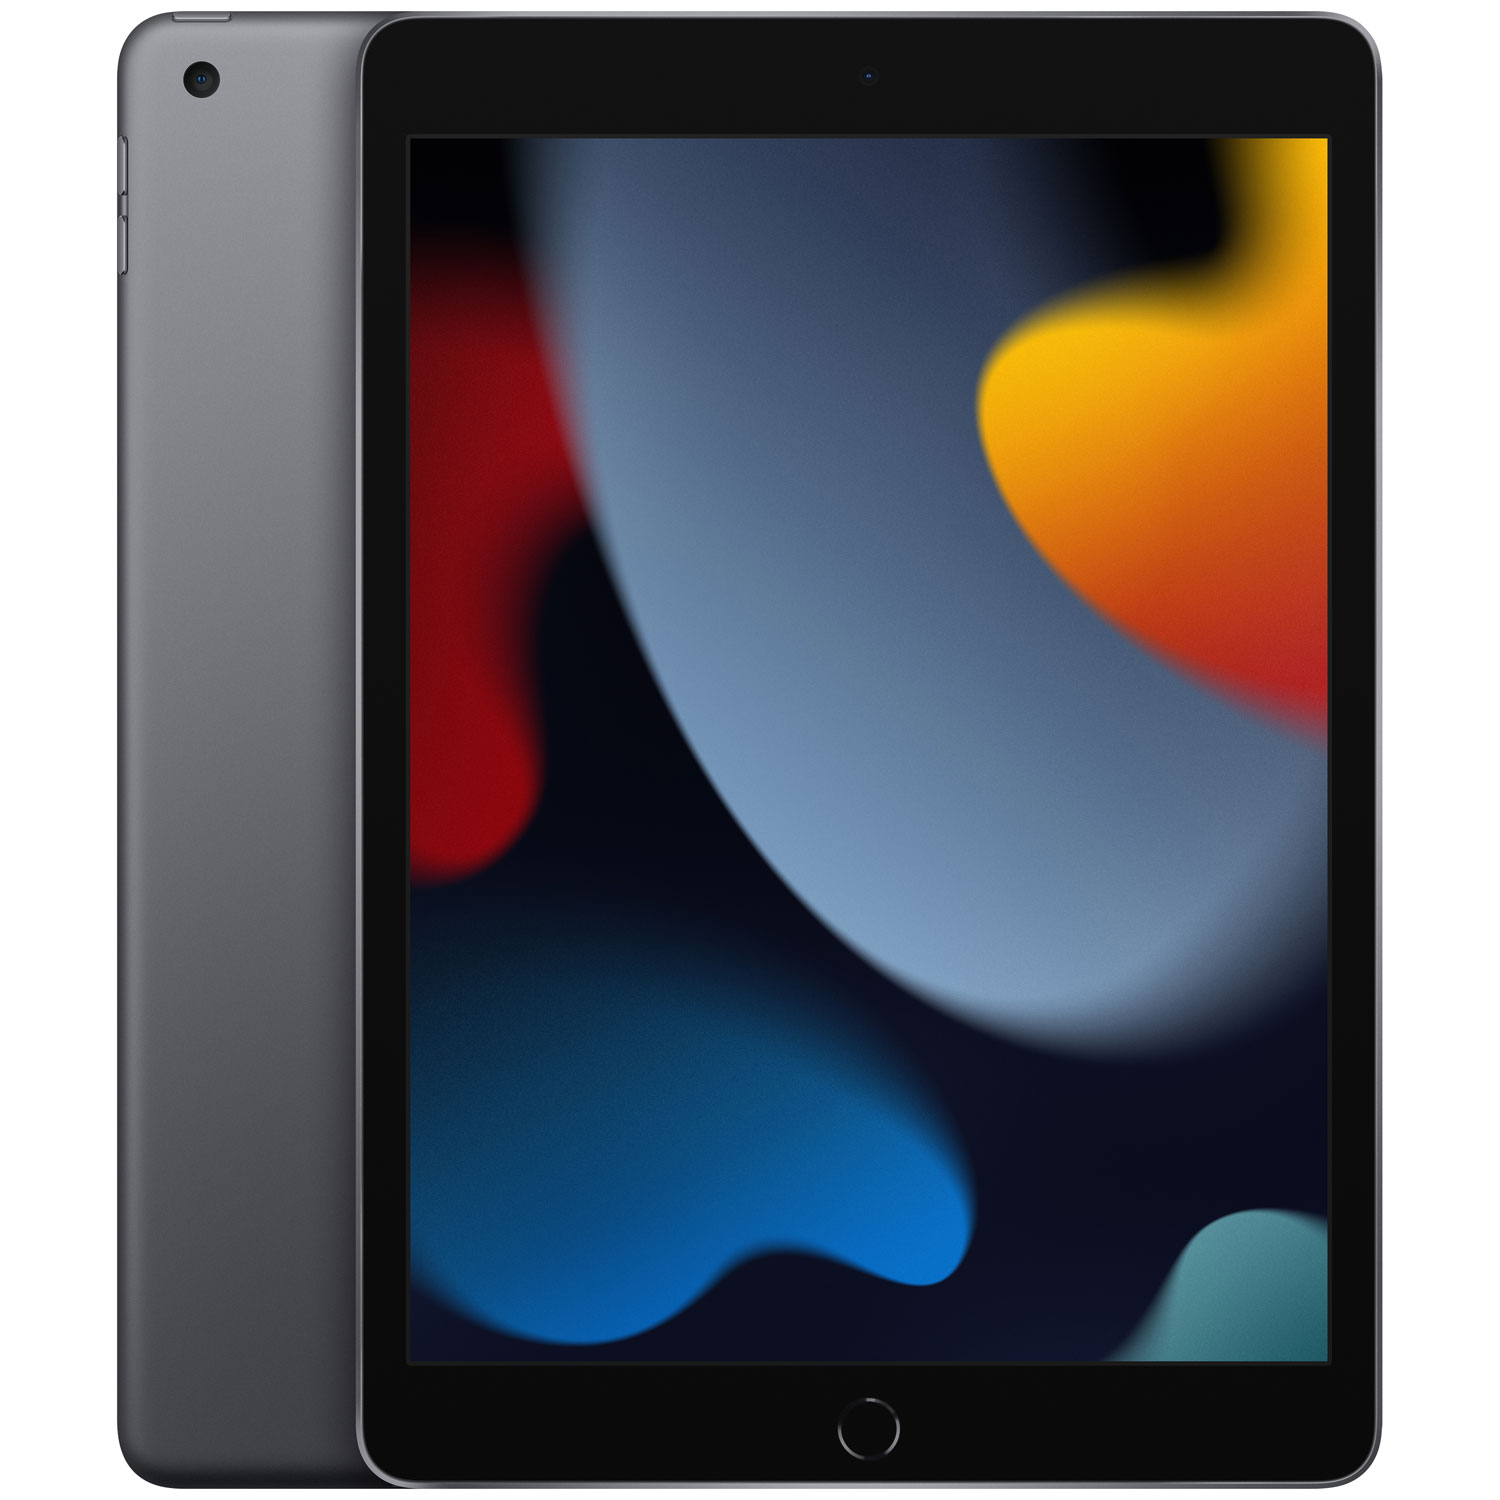 Apple iPad 10.2" 256GB with Wi-Fi (9th Generation) - Space Grey